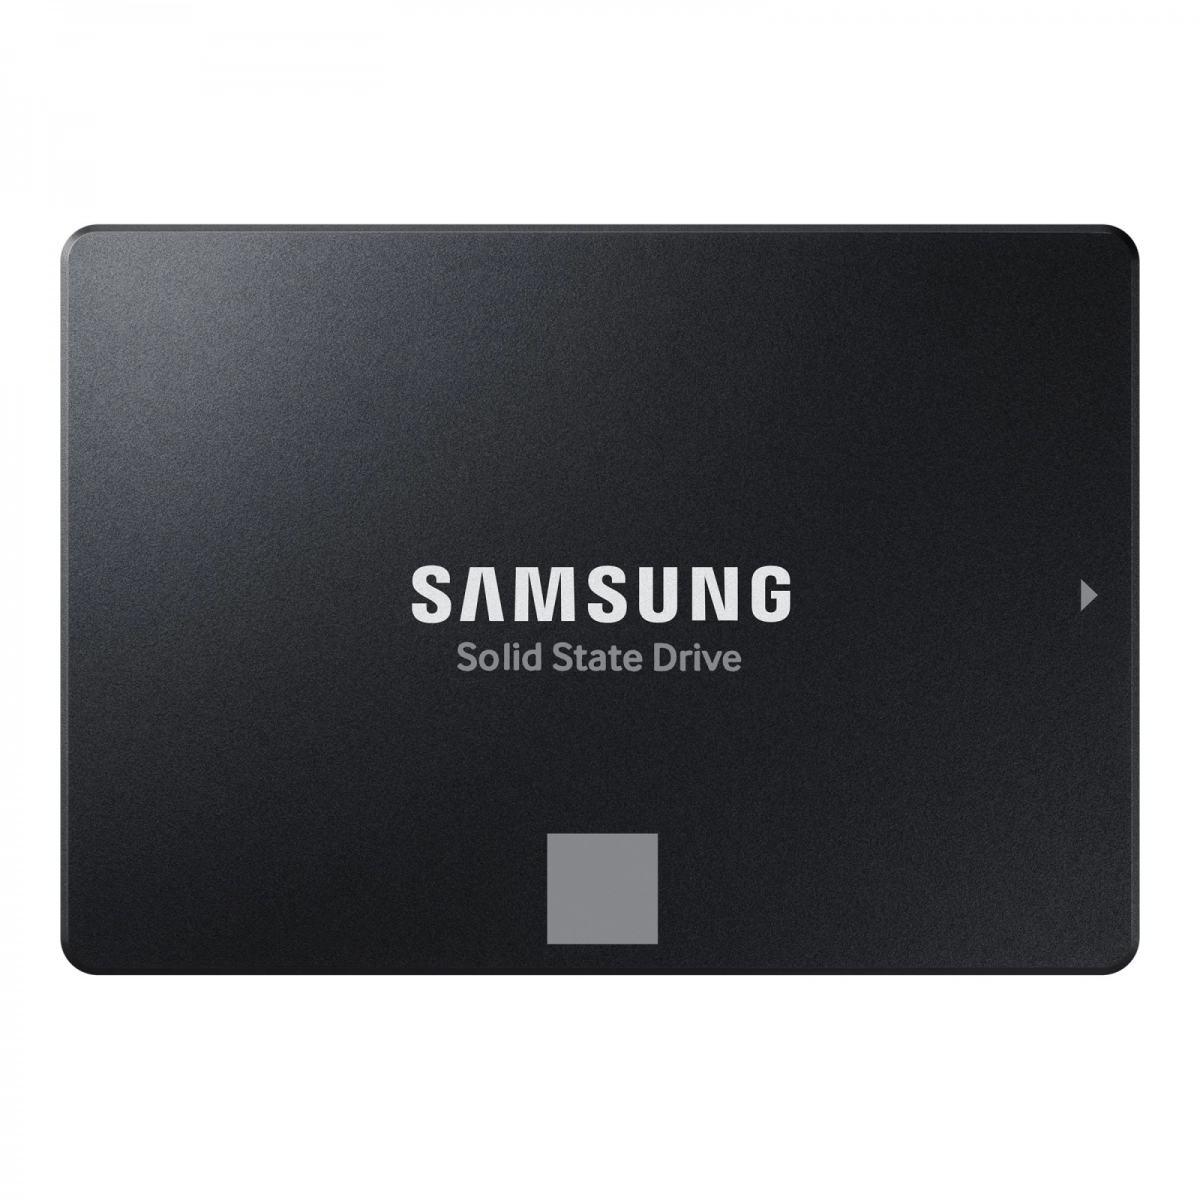 Notebook-Festplatte 250GB, SSD SATA3 MLC für FUJITSU LifeBook AH530